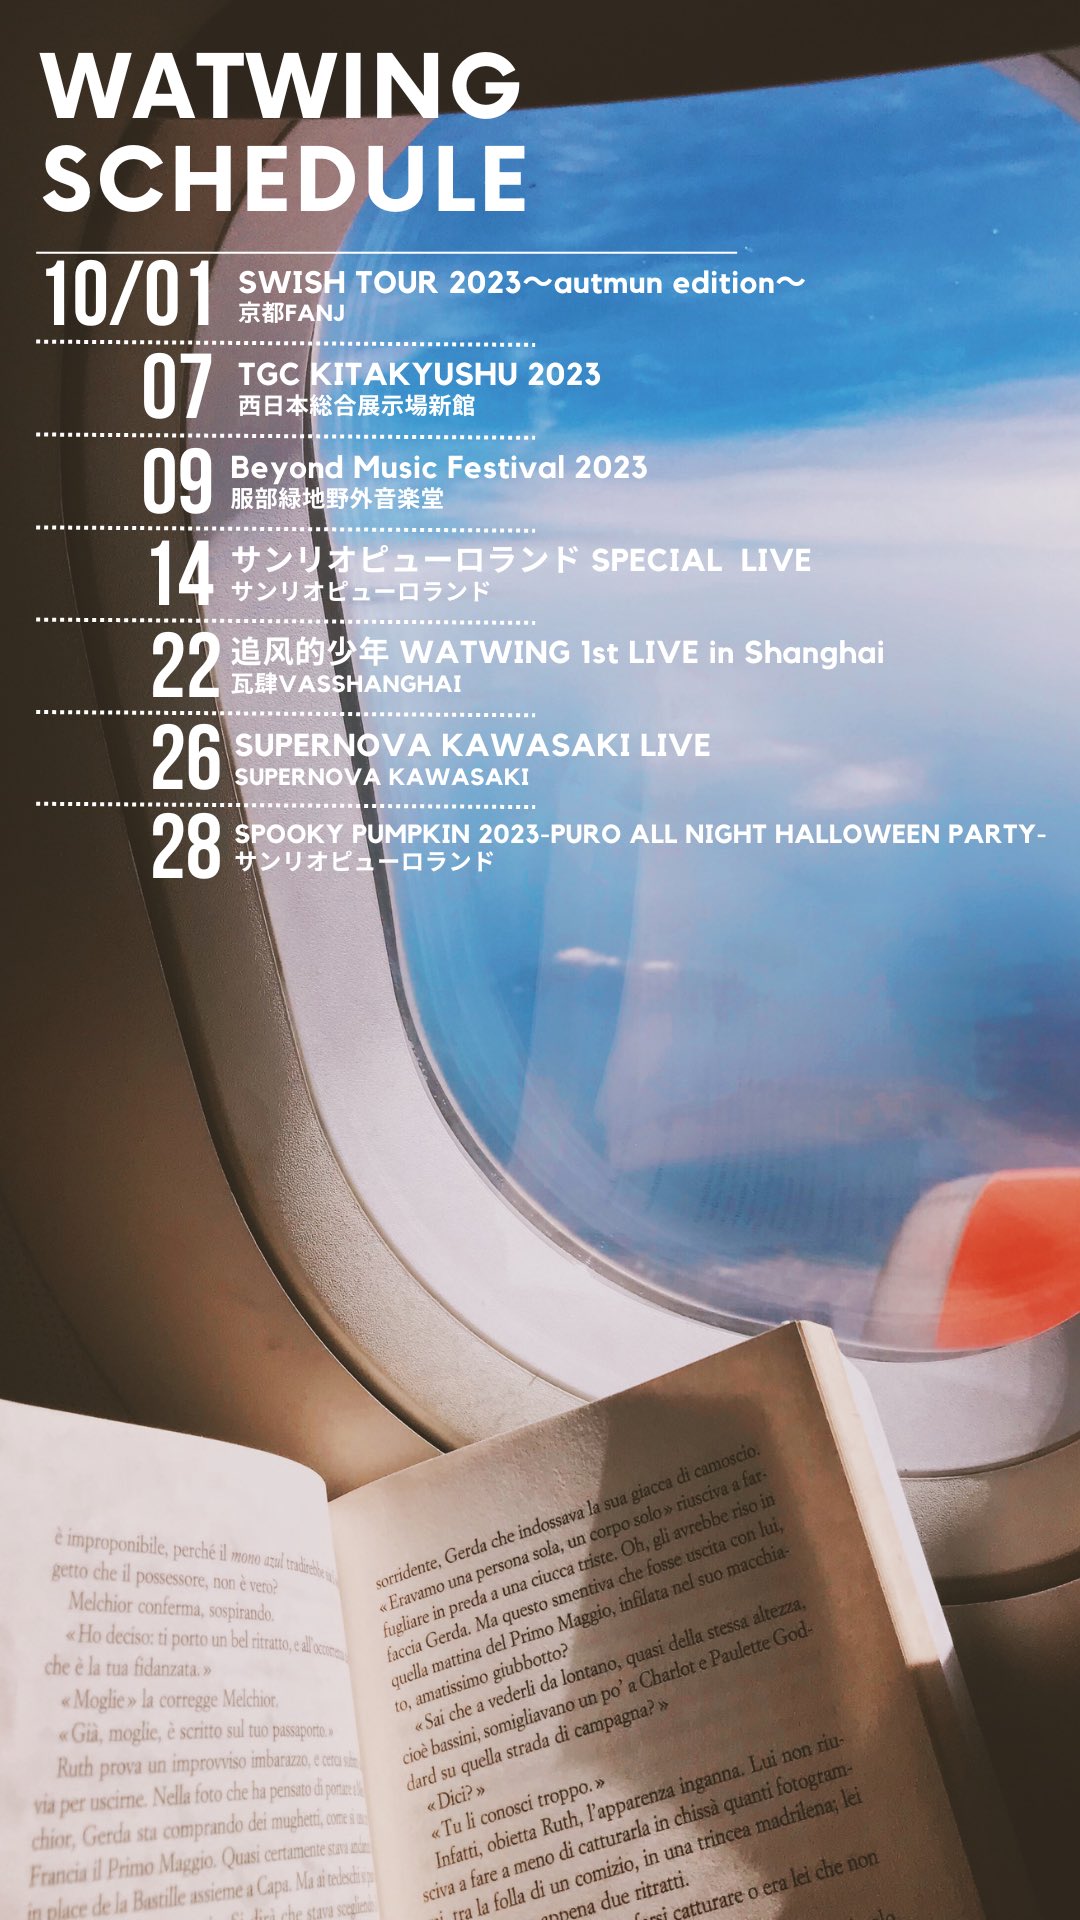 SWISH TOUR 2023 -autumn edition- 岐阜 昼公演-